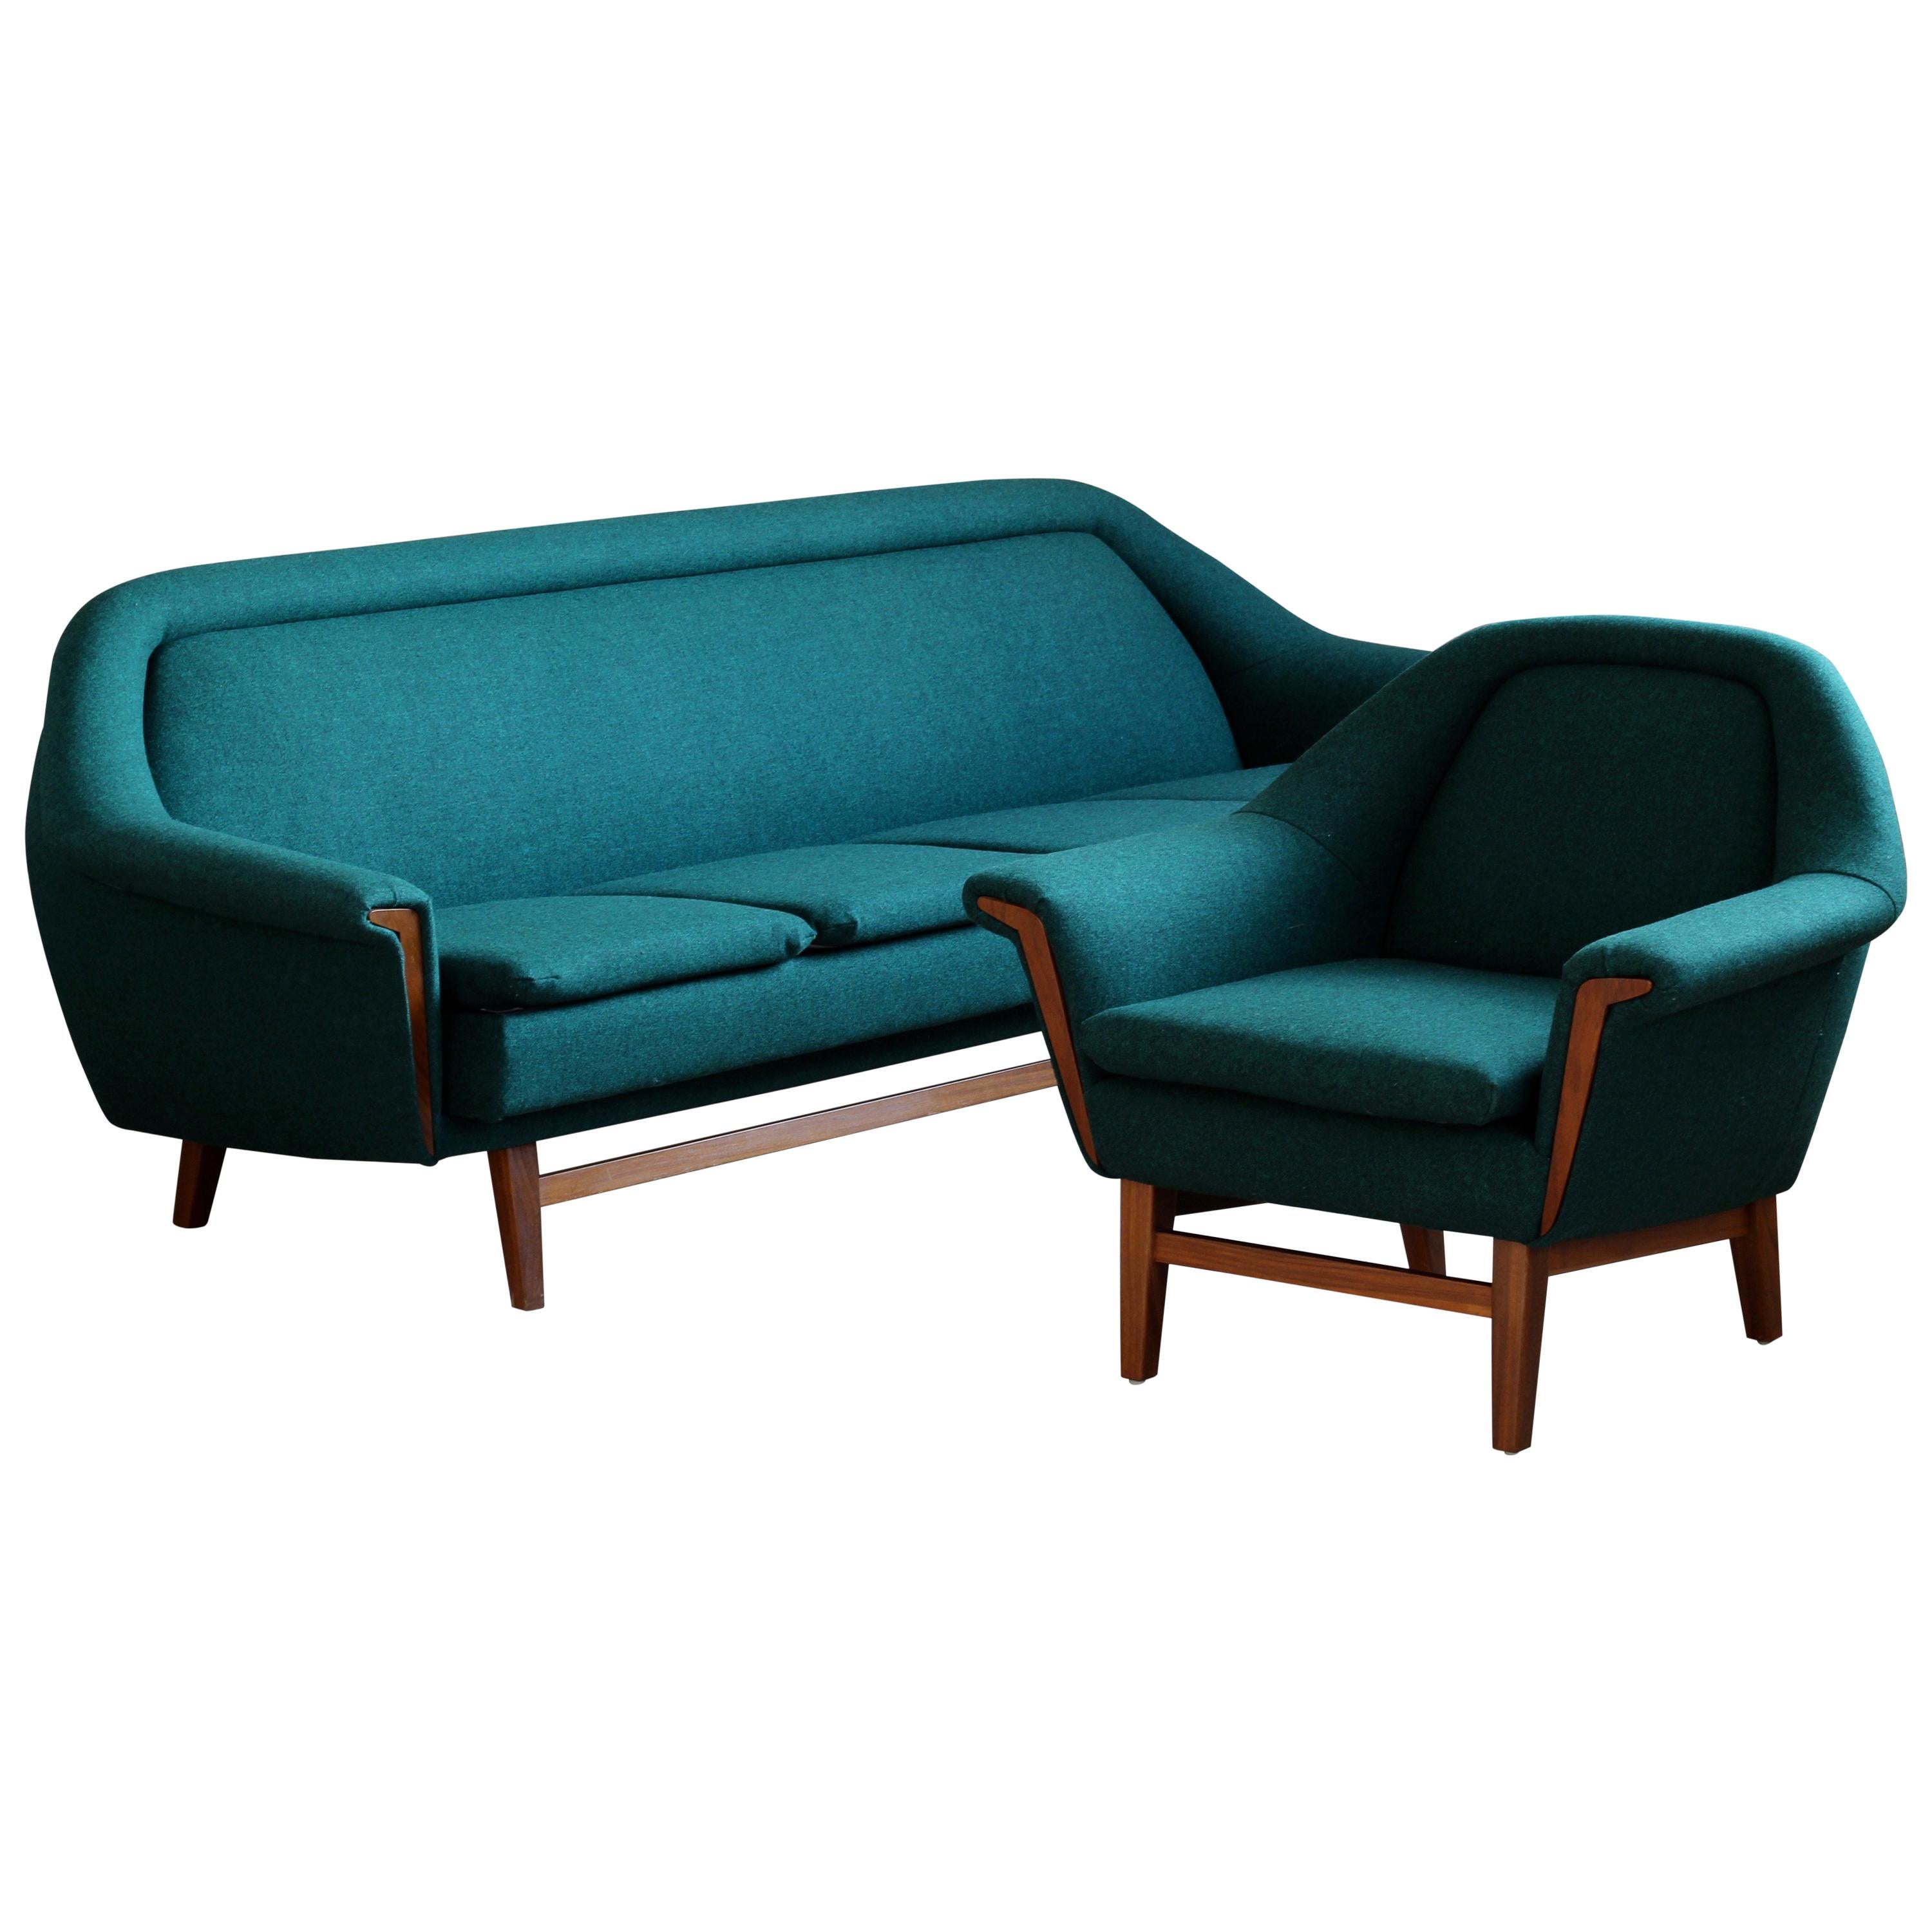 Sofa Set by Holm Fabriker in Emerald Green Kvadrat Fabric, Mid-Century Modern